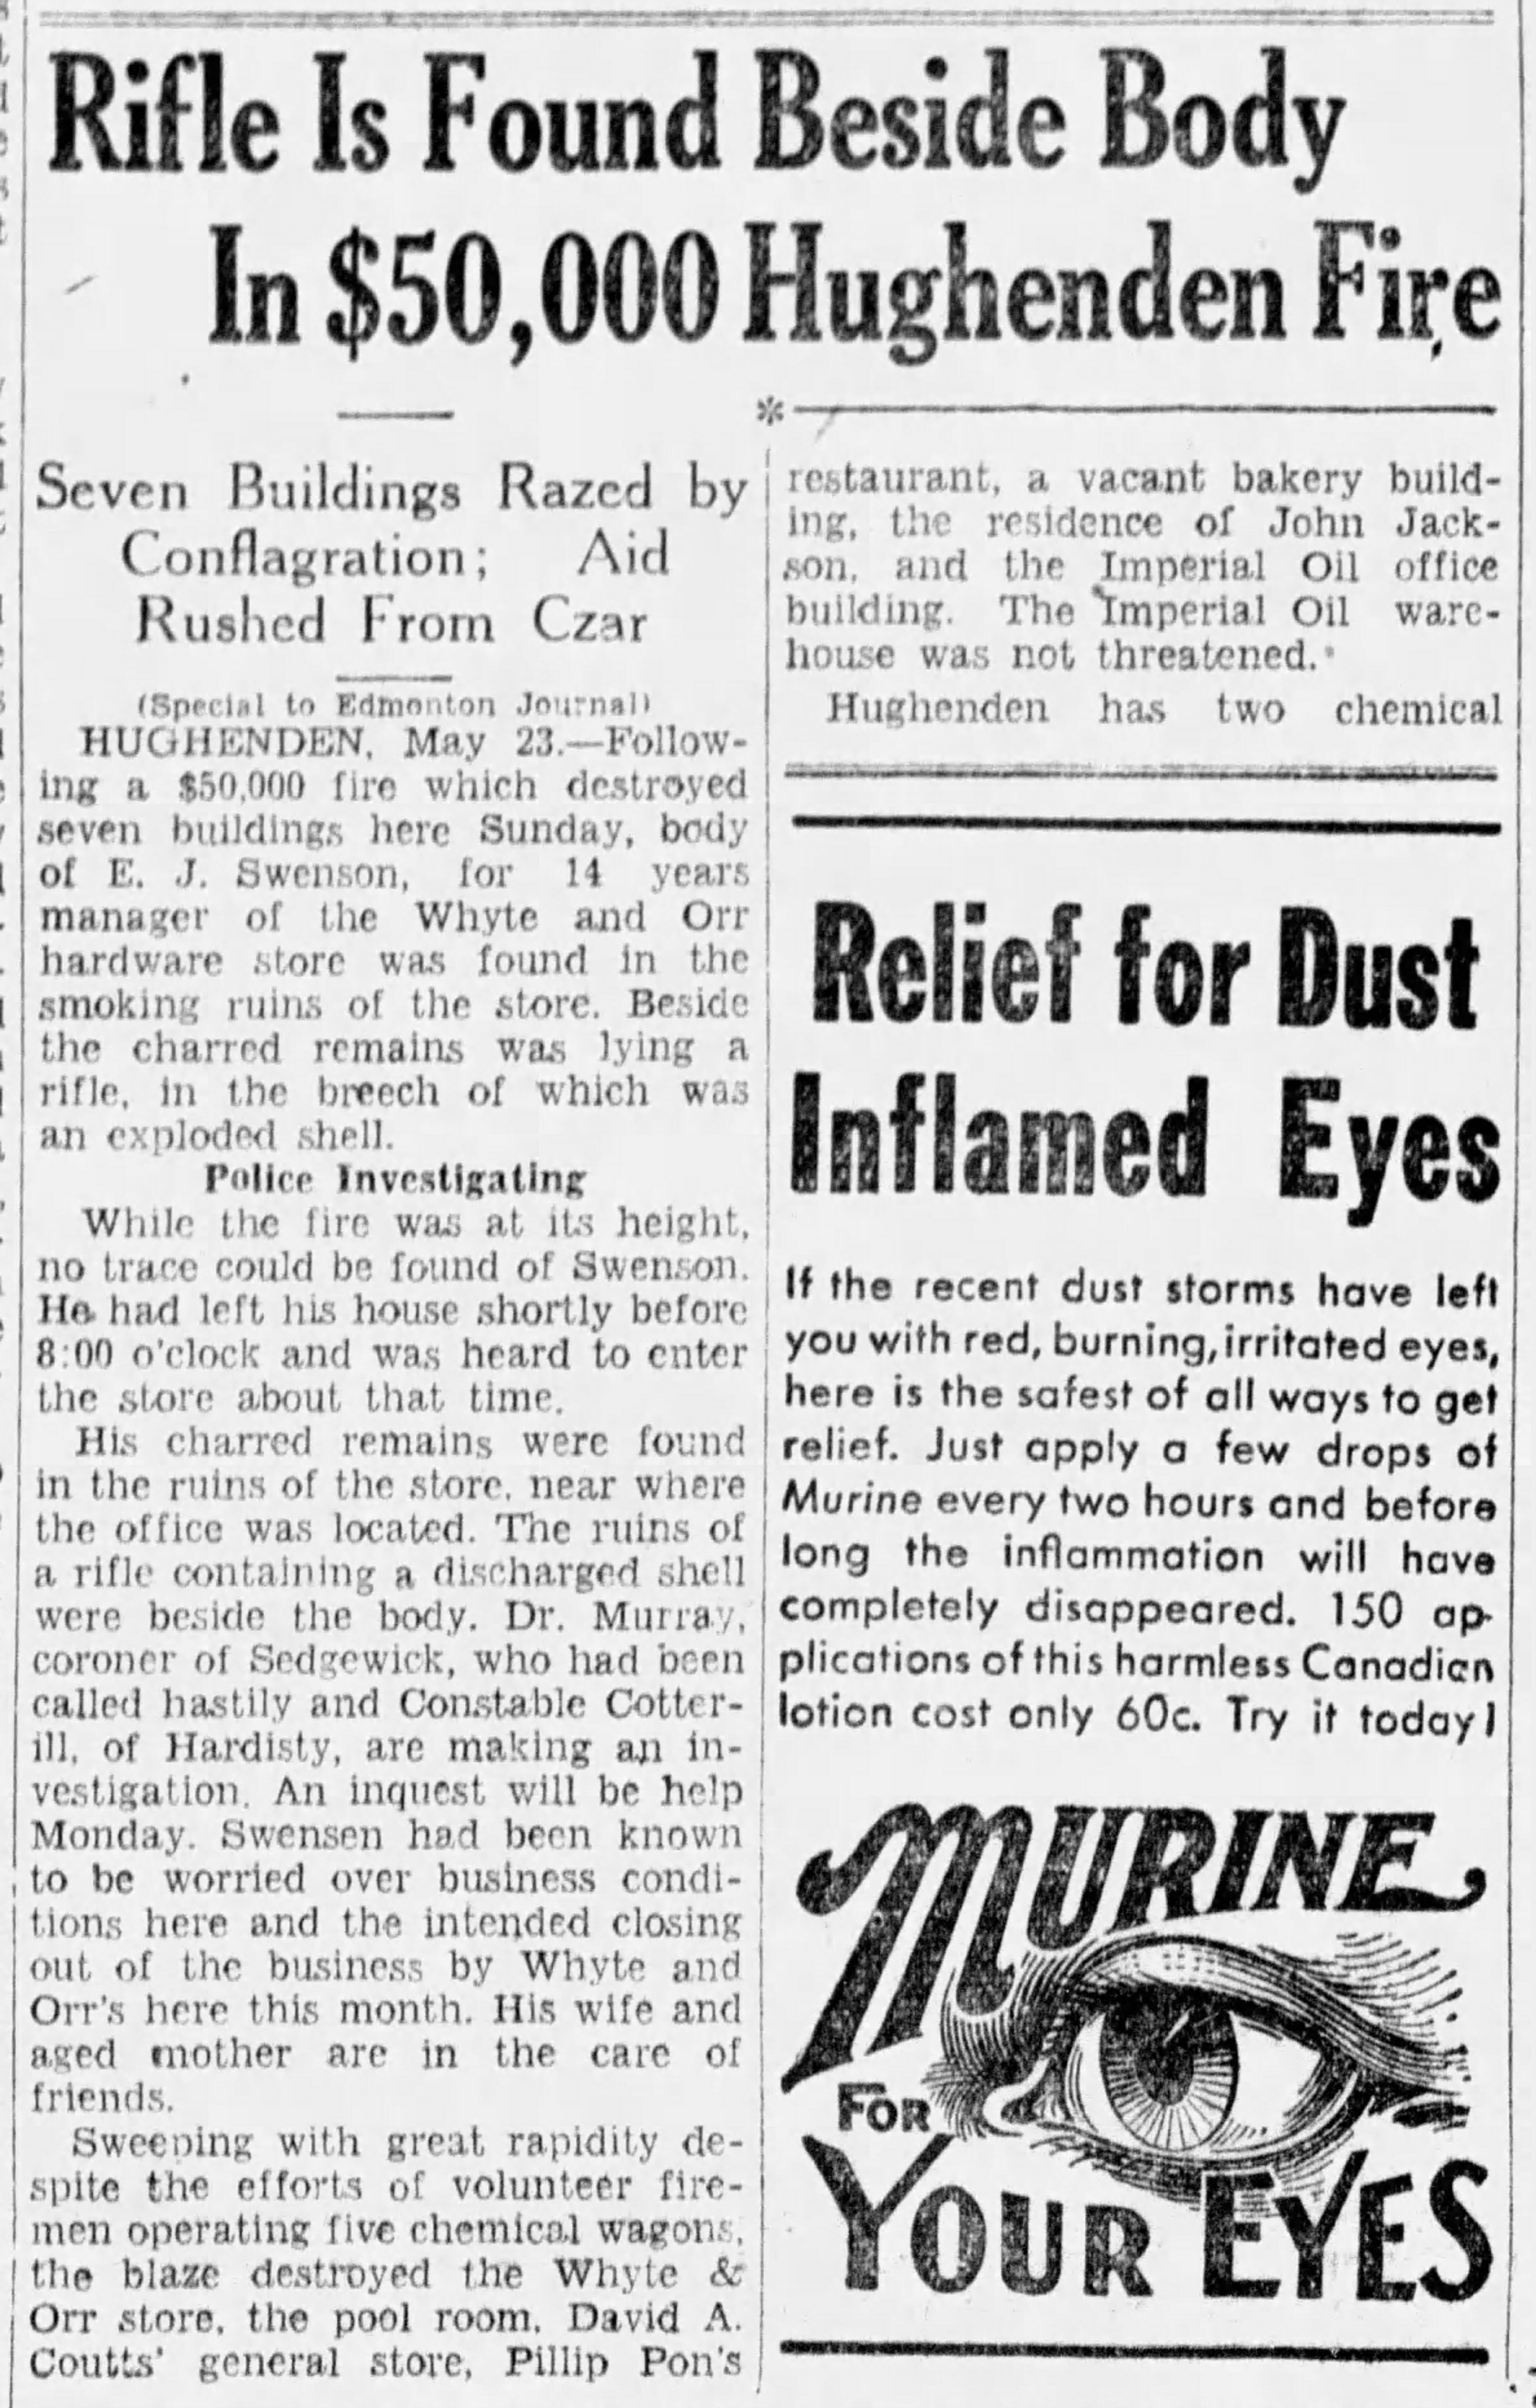 Edmonton Journal 1932 Fire